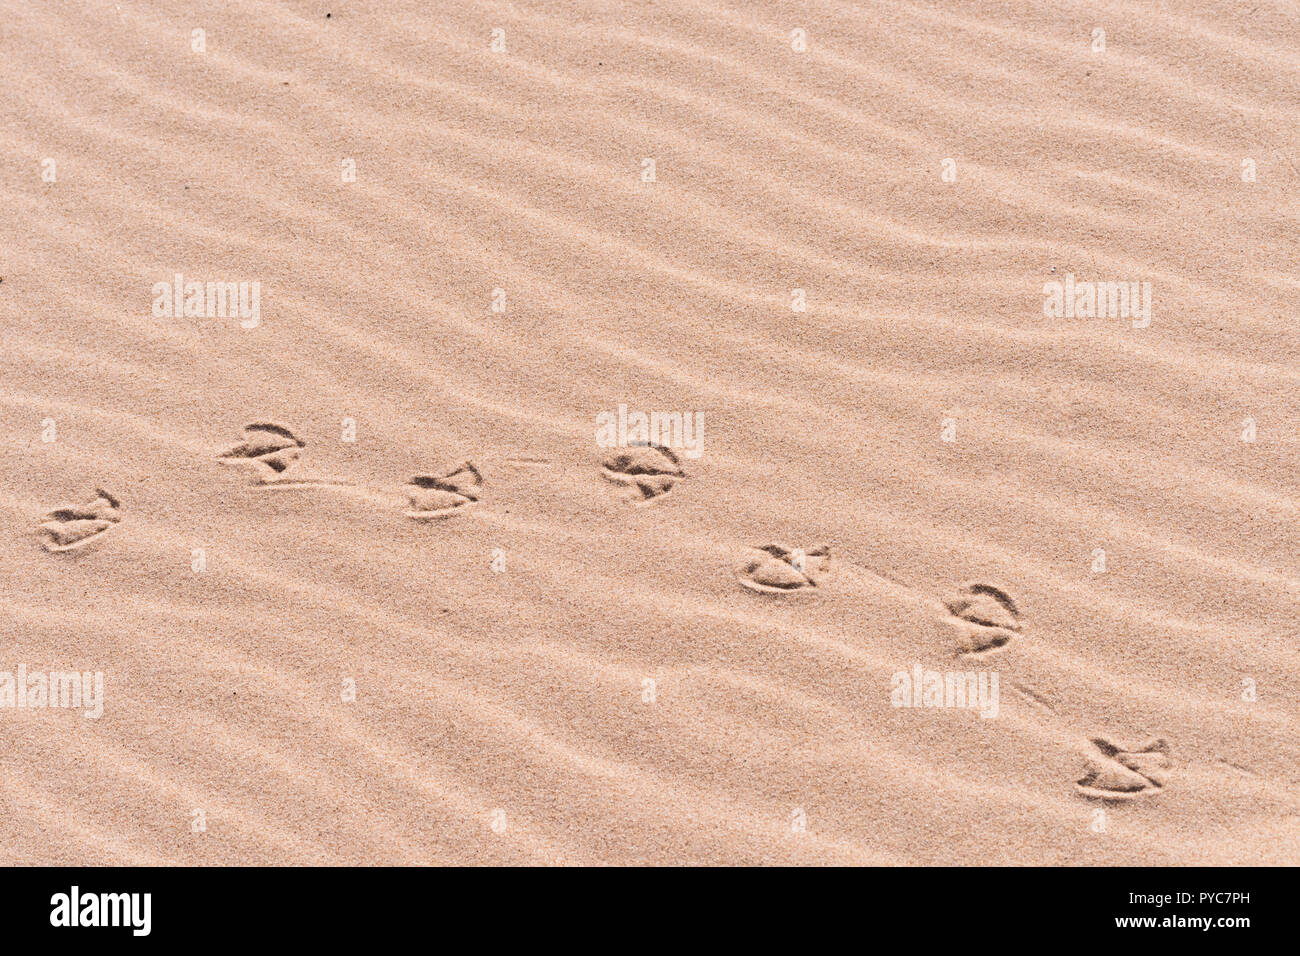 Palmate (webbed) bird track (footprint) in sand on a beach. Stock Photo